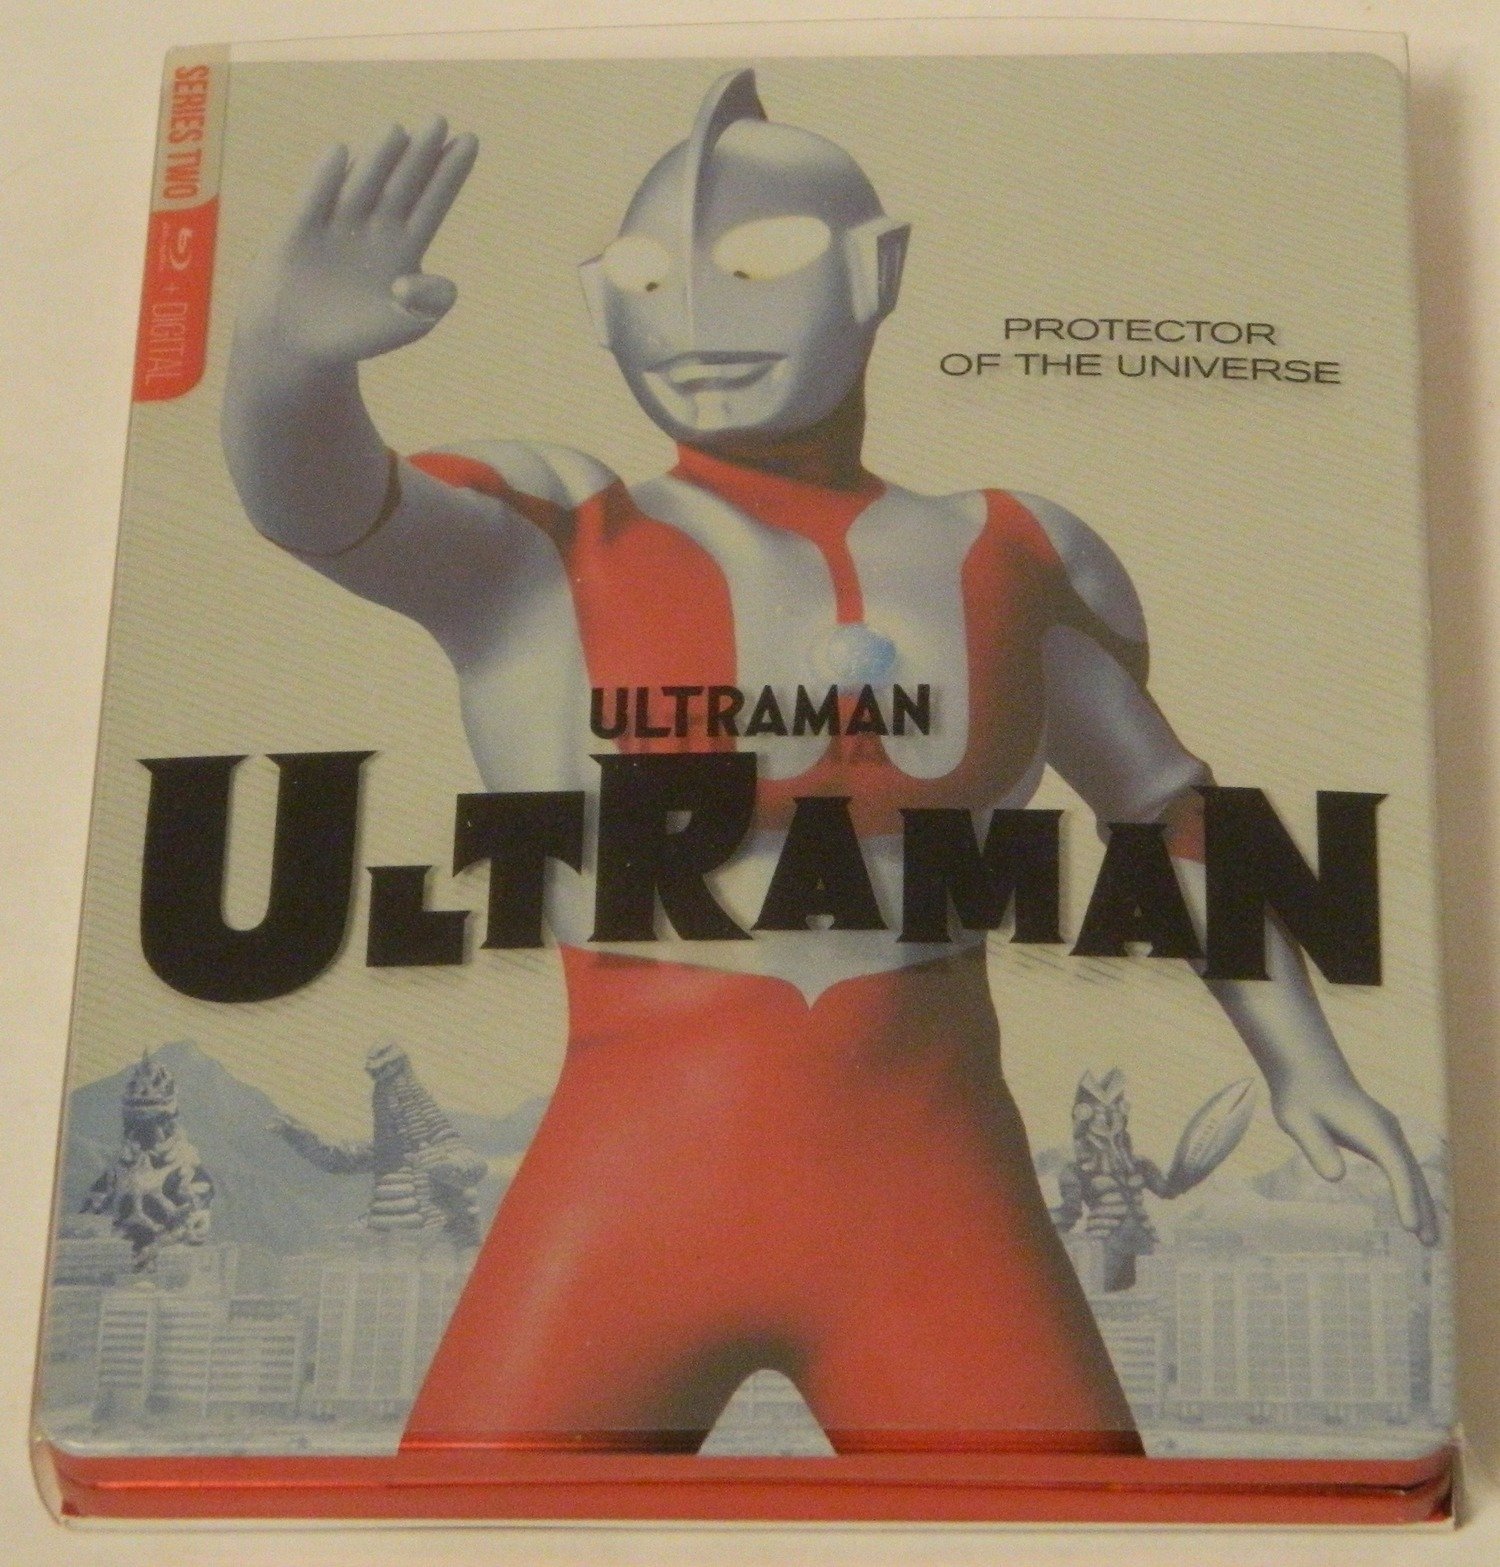 Ultraman The Complete Series SteelBook Edition Blu-ray